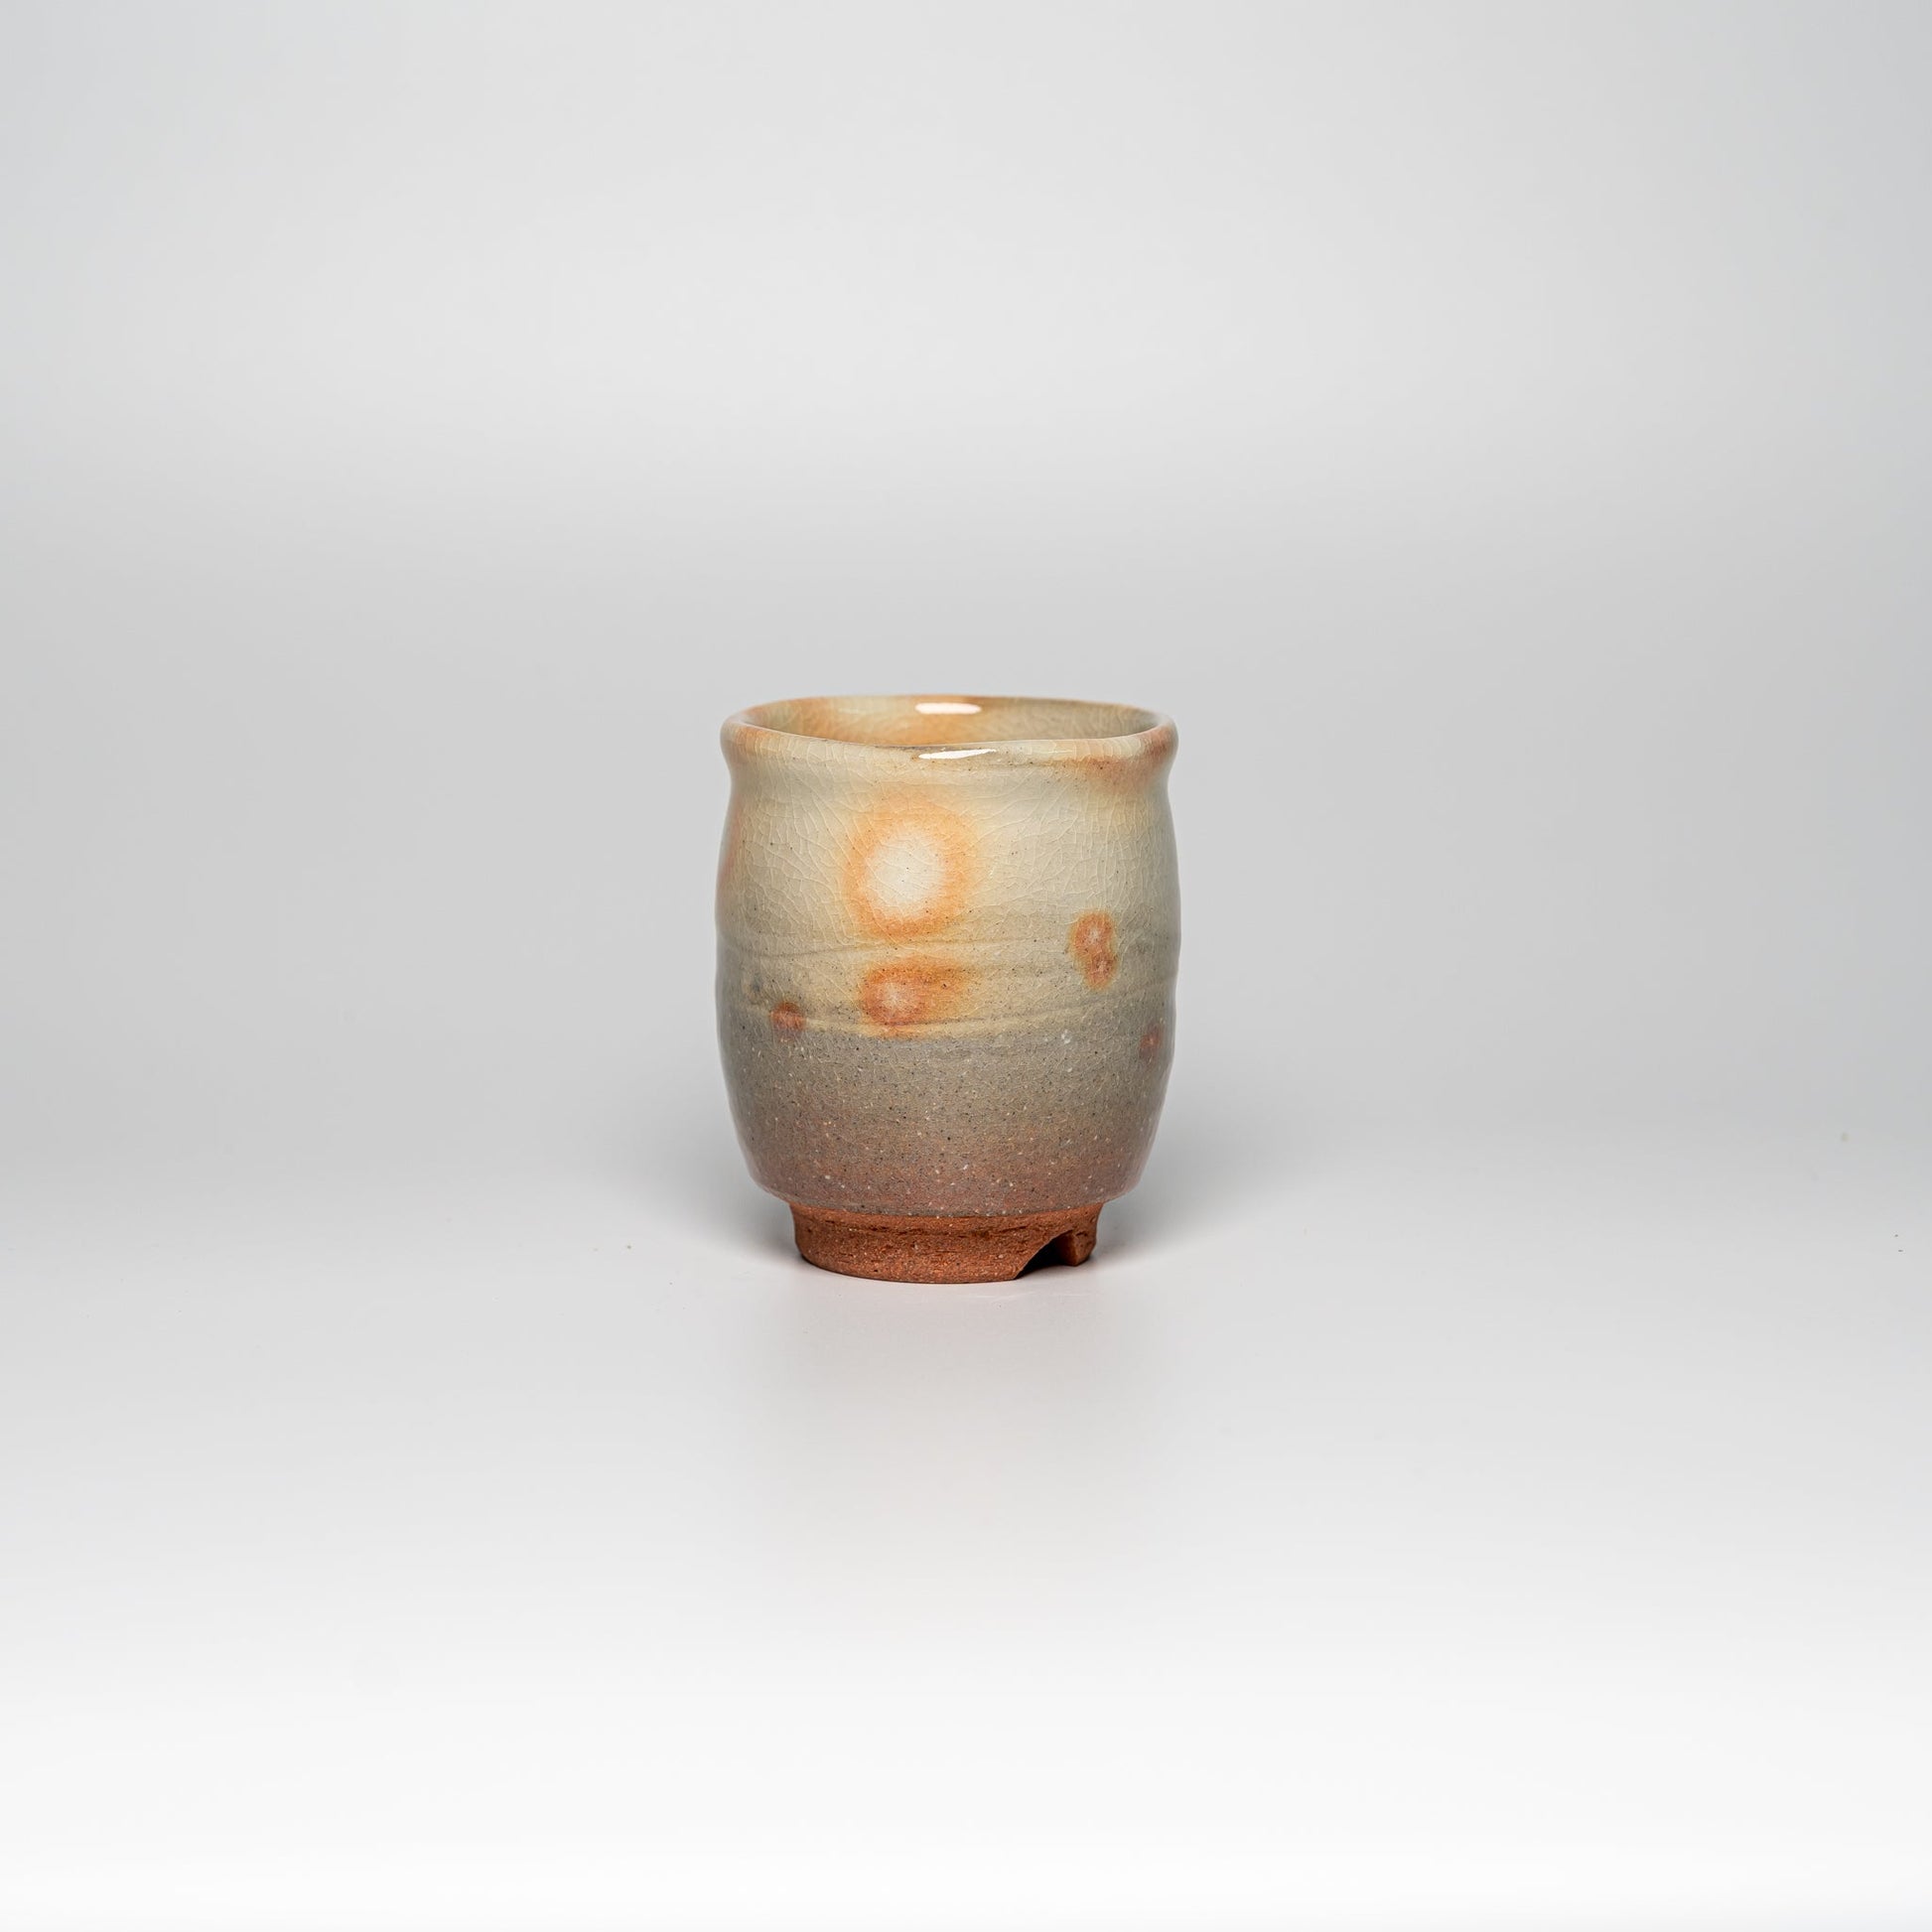 A kesho Hagi yaki teacup on a white background